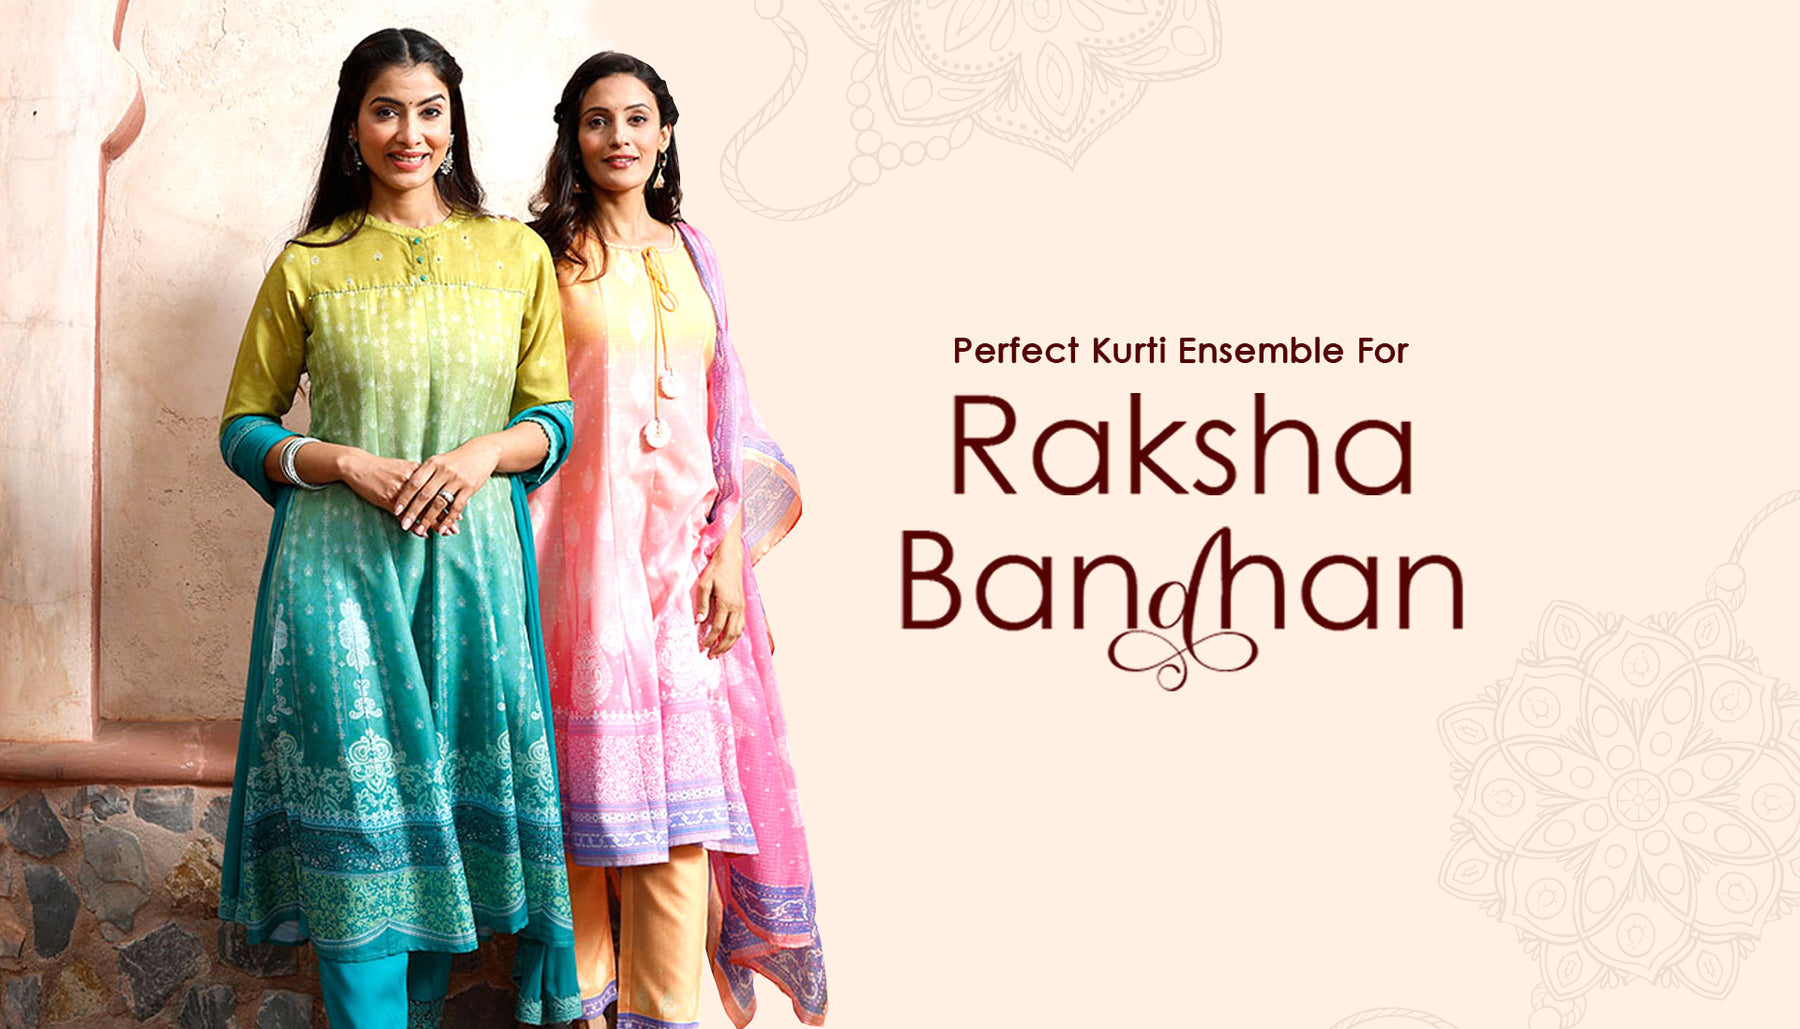 Perfect Kurti Ensemble For Raksha Bandhan From SHREE